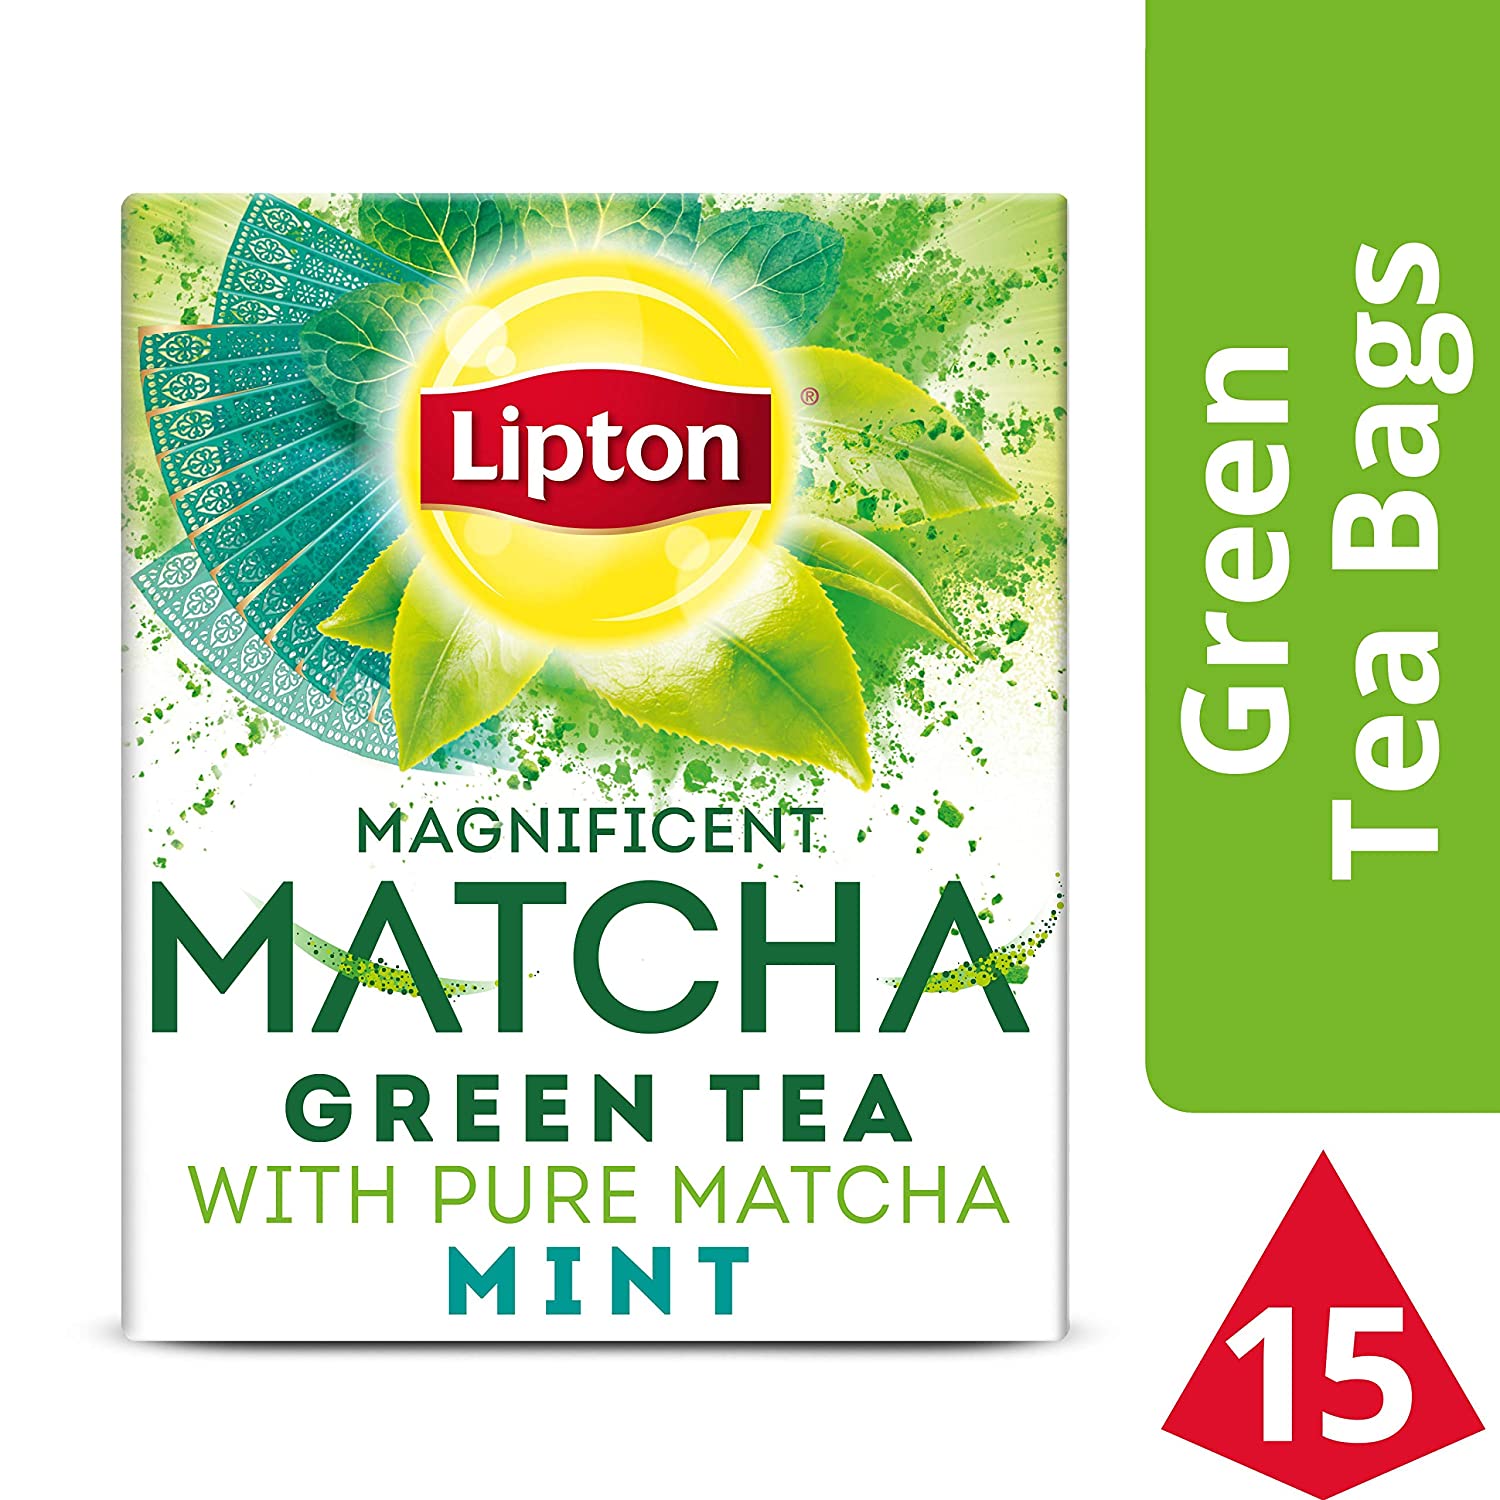 Lipton Magnificent Matcha Green Tea Bags, Mint 15 ct (Pack ...